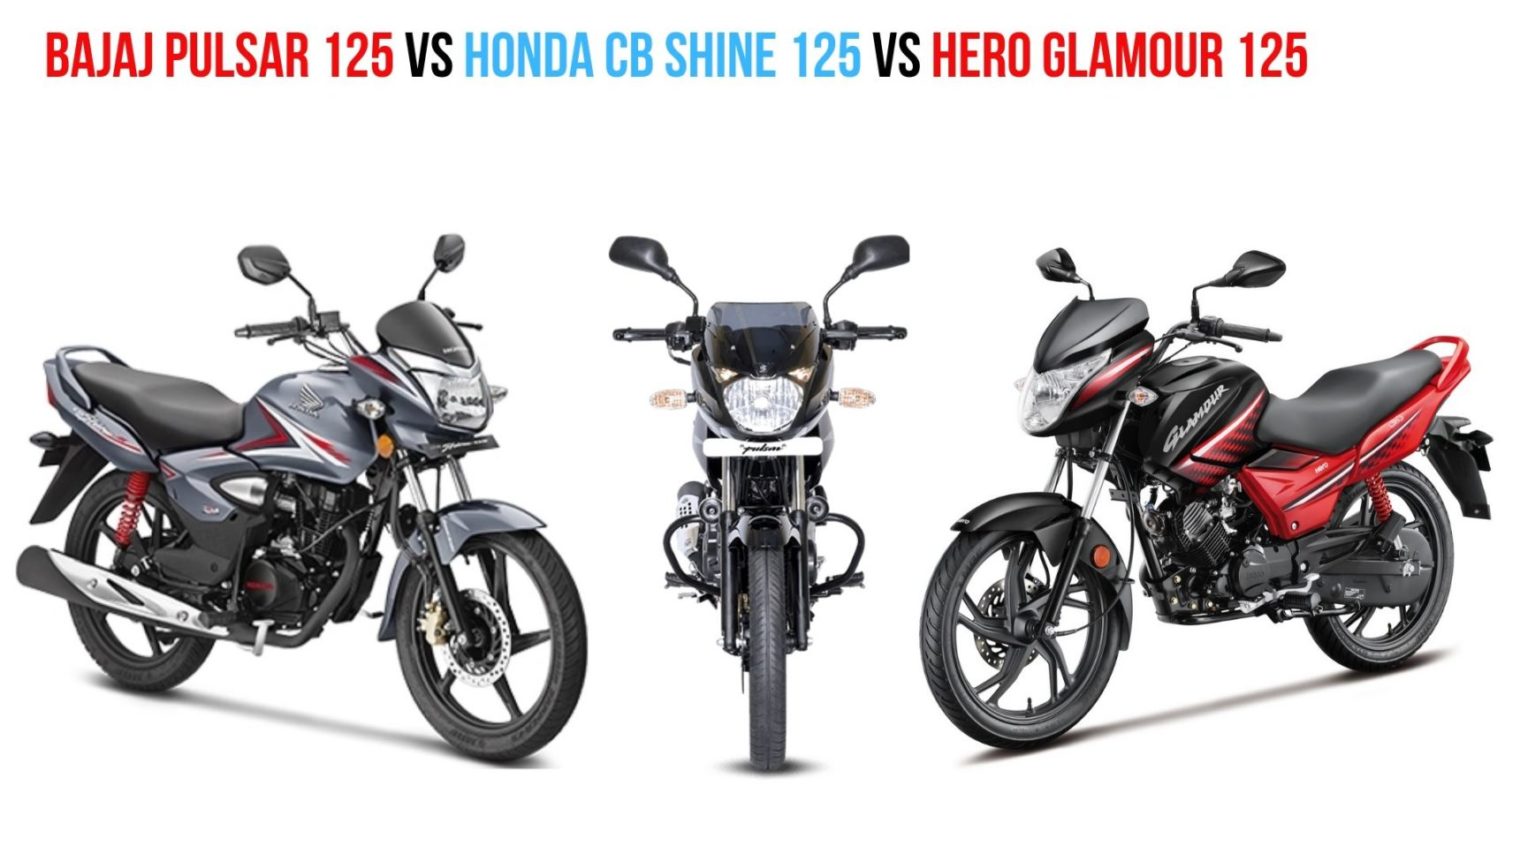 Honda Shine Bike New Model Image